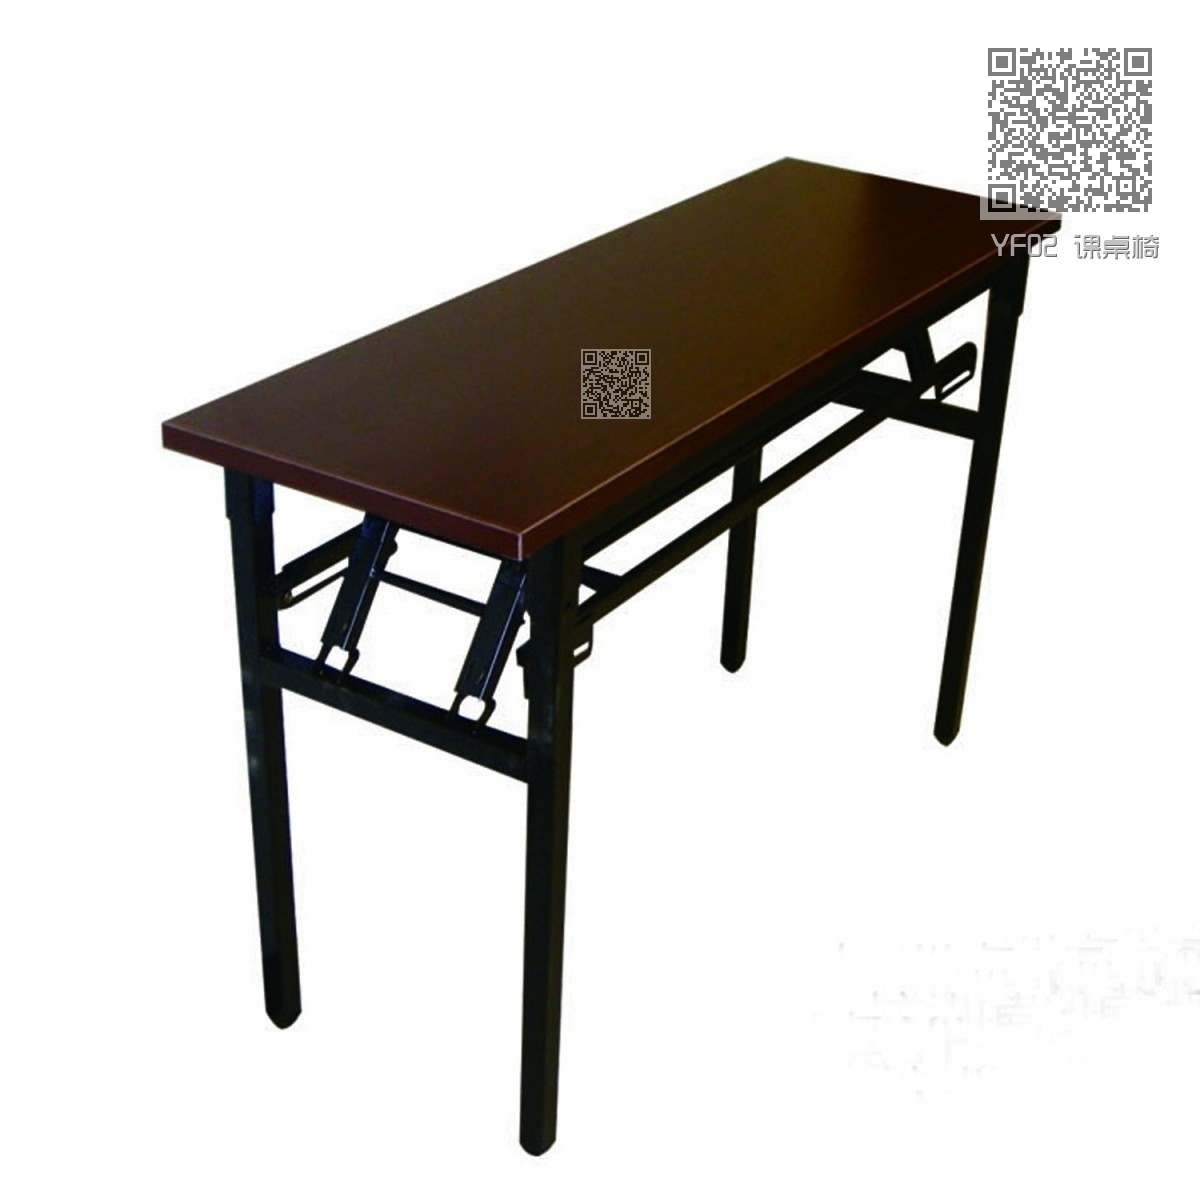 YF02 课桌椅